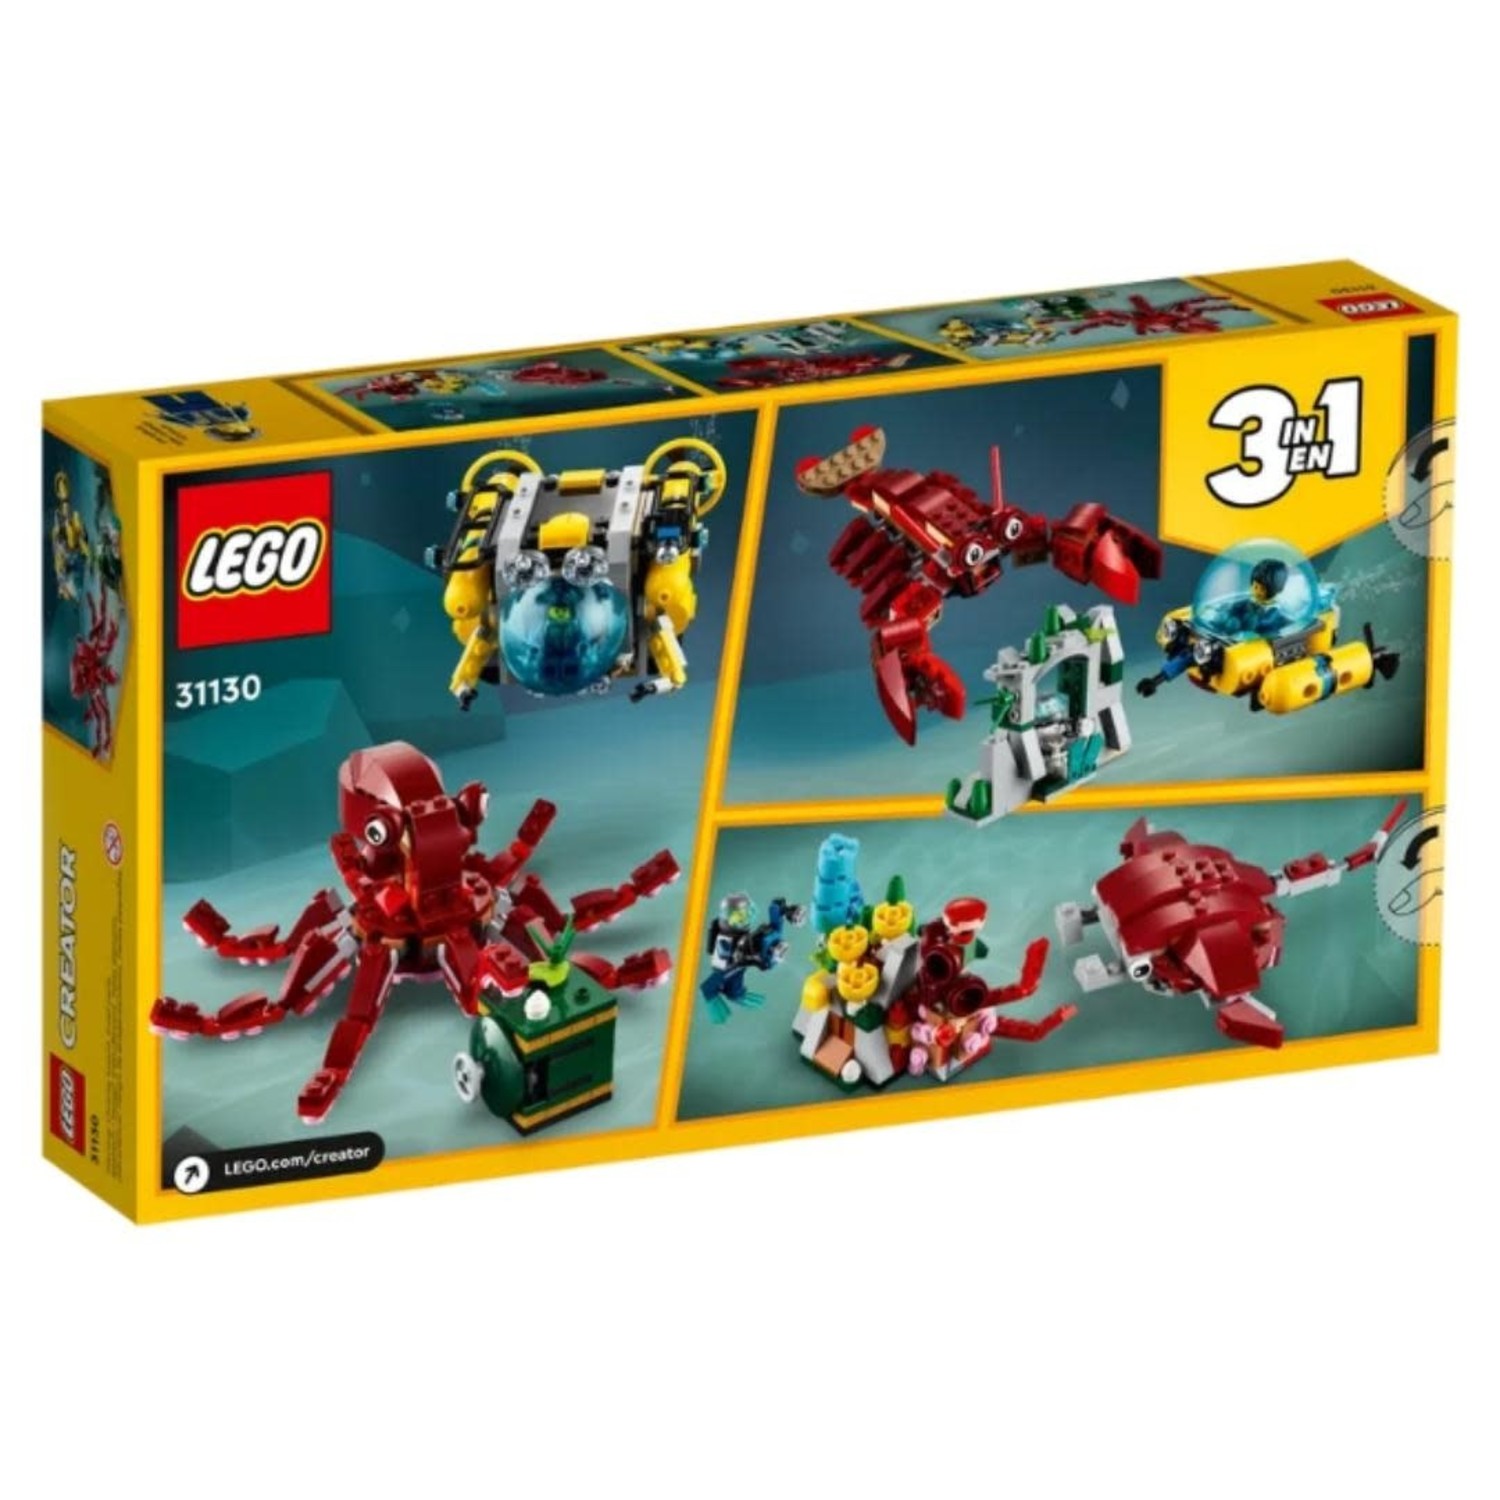 Mission LEGO Creator - Toys and Books